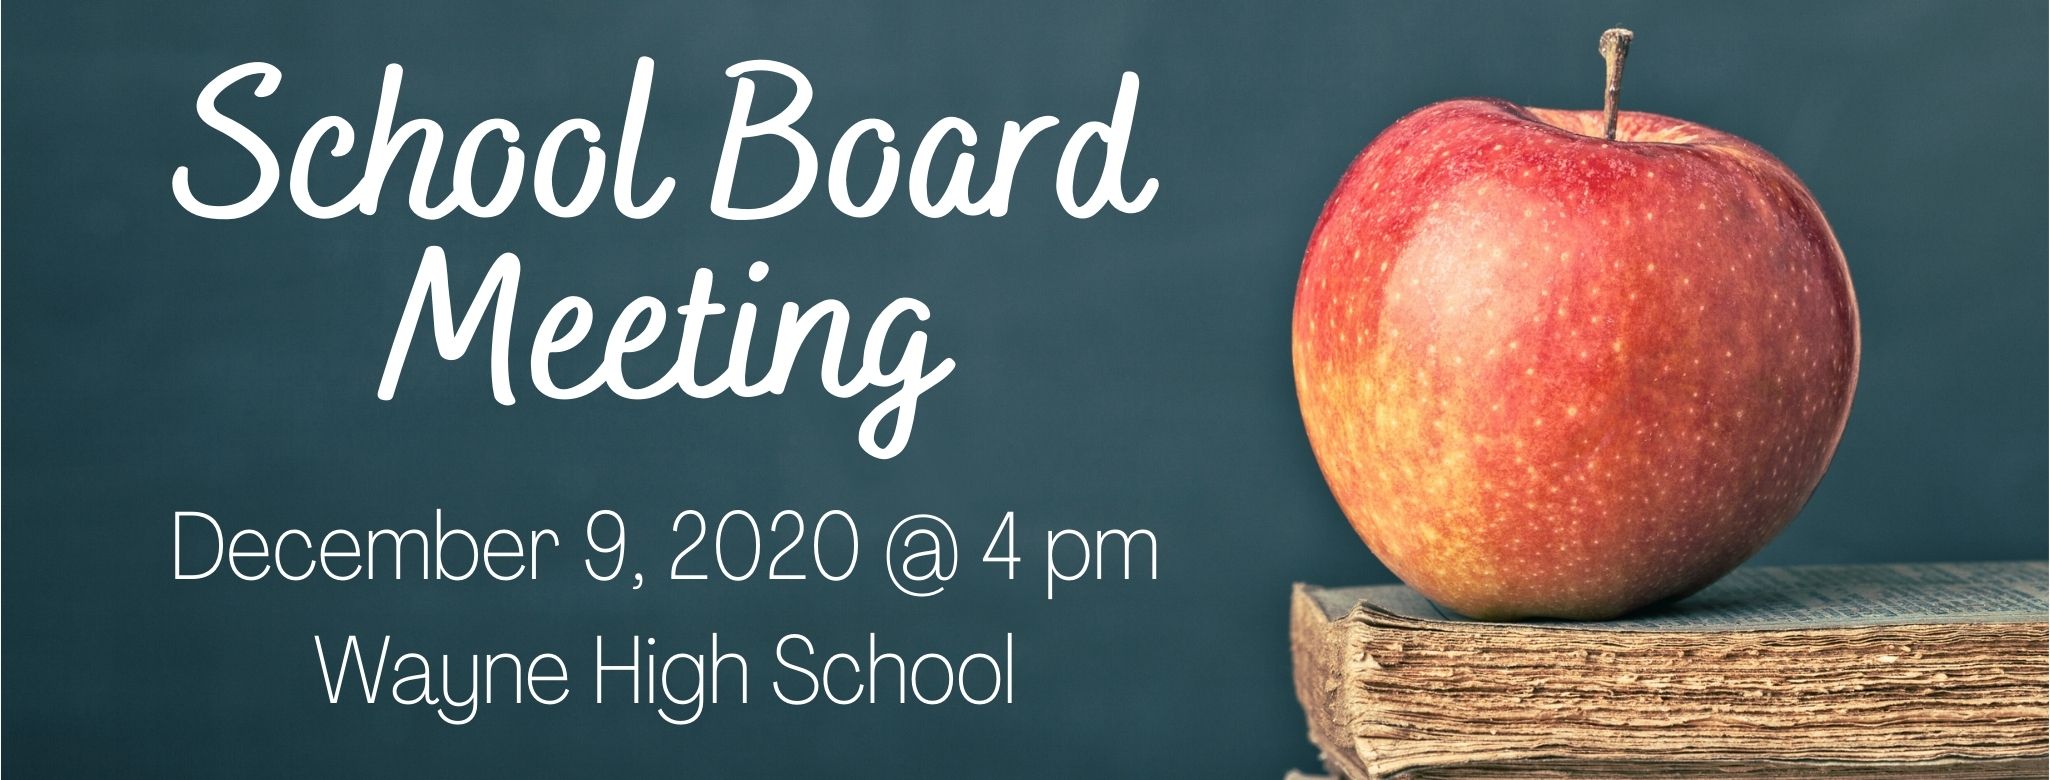 School Board Meeting12 20